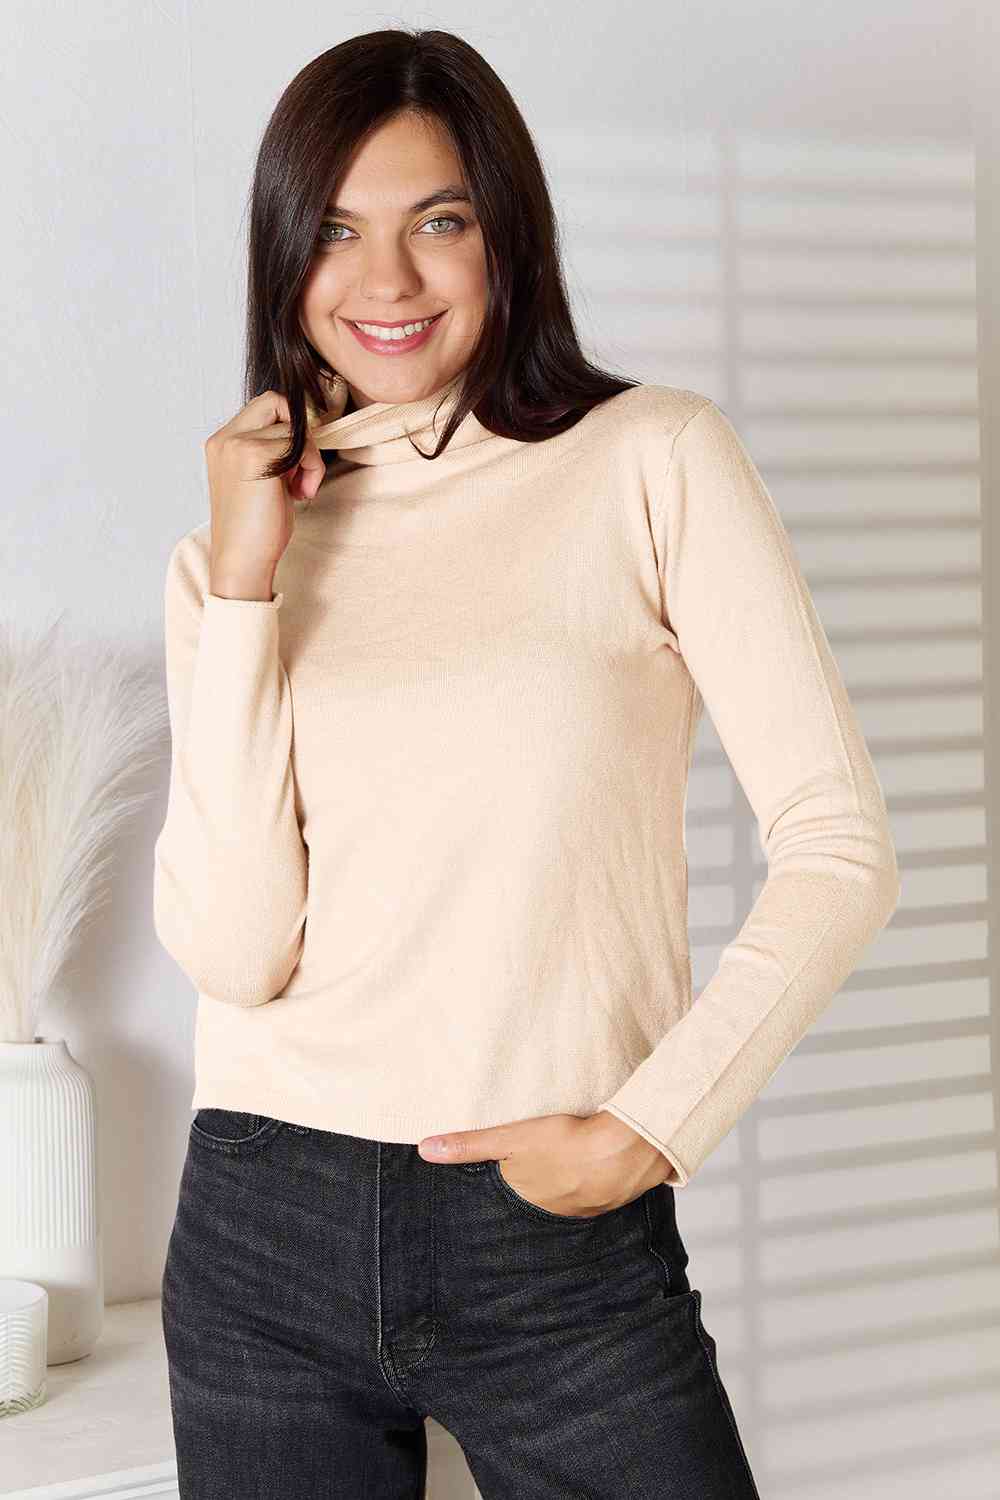 Light Gray Turtleneck Long Sleeve Knit Top Sentient Beauty Fashions